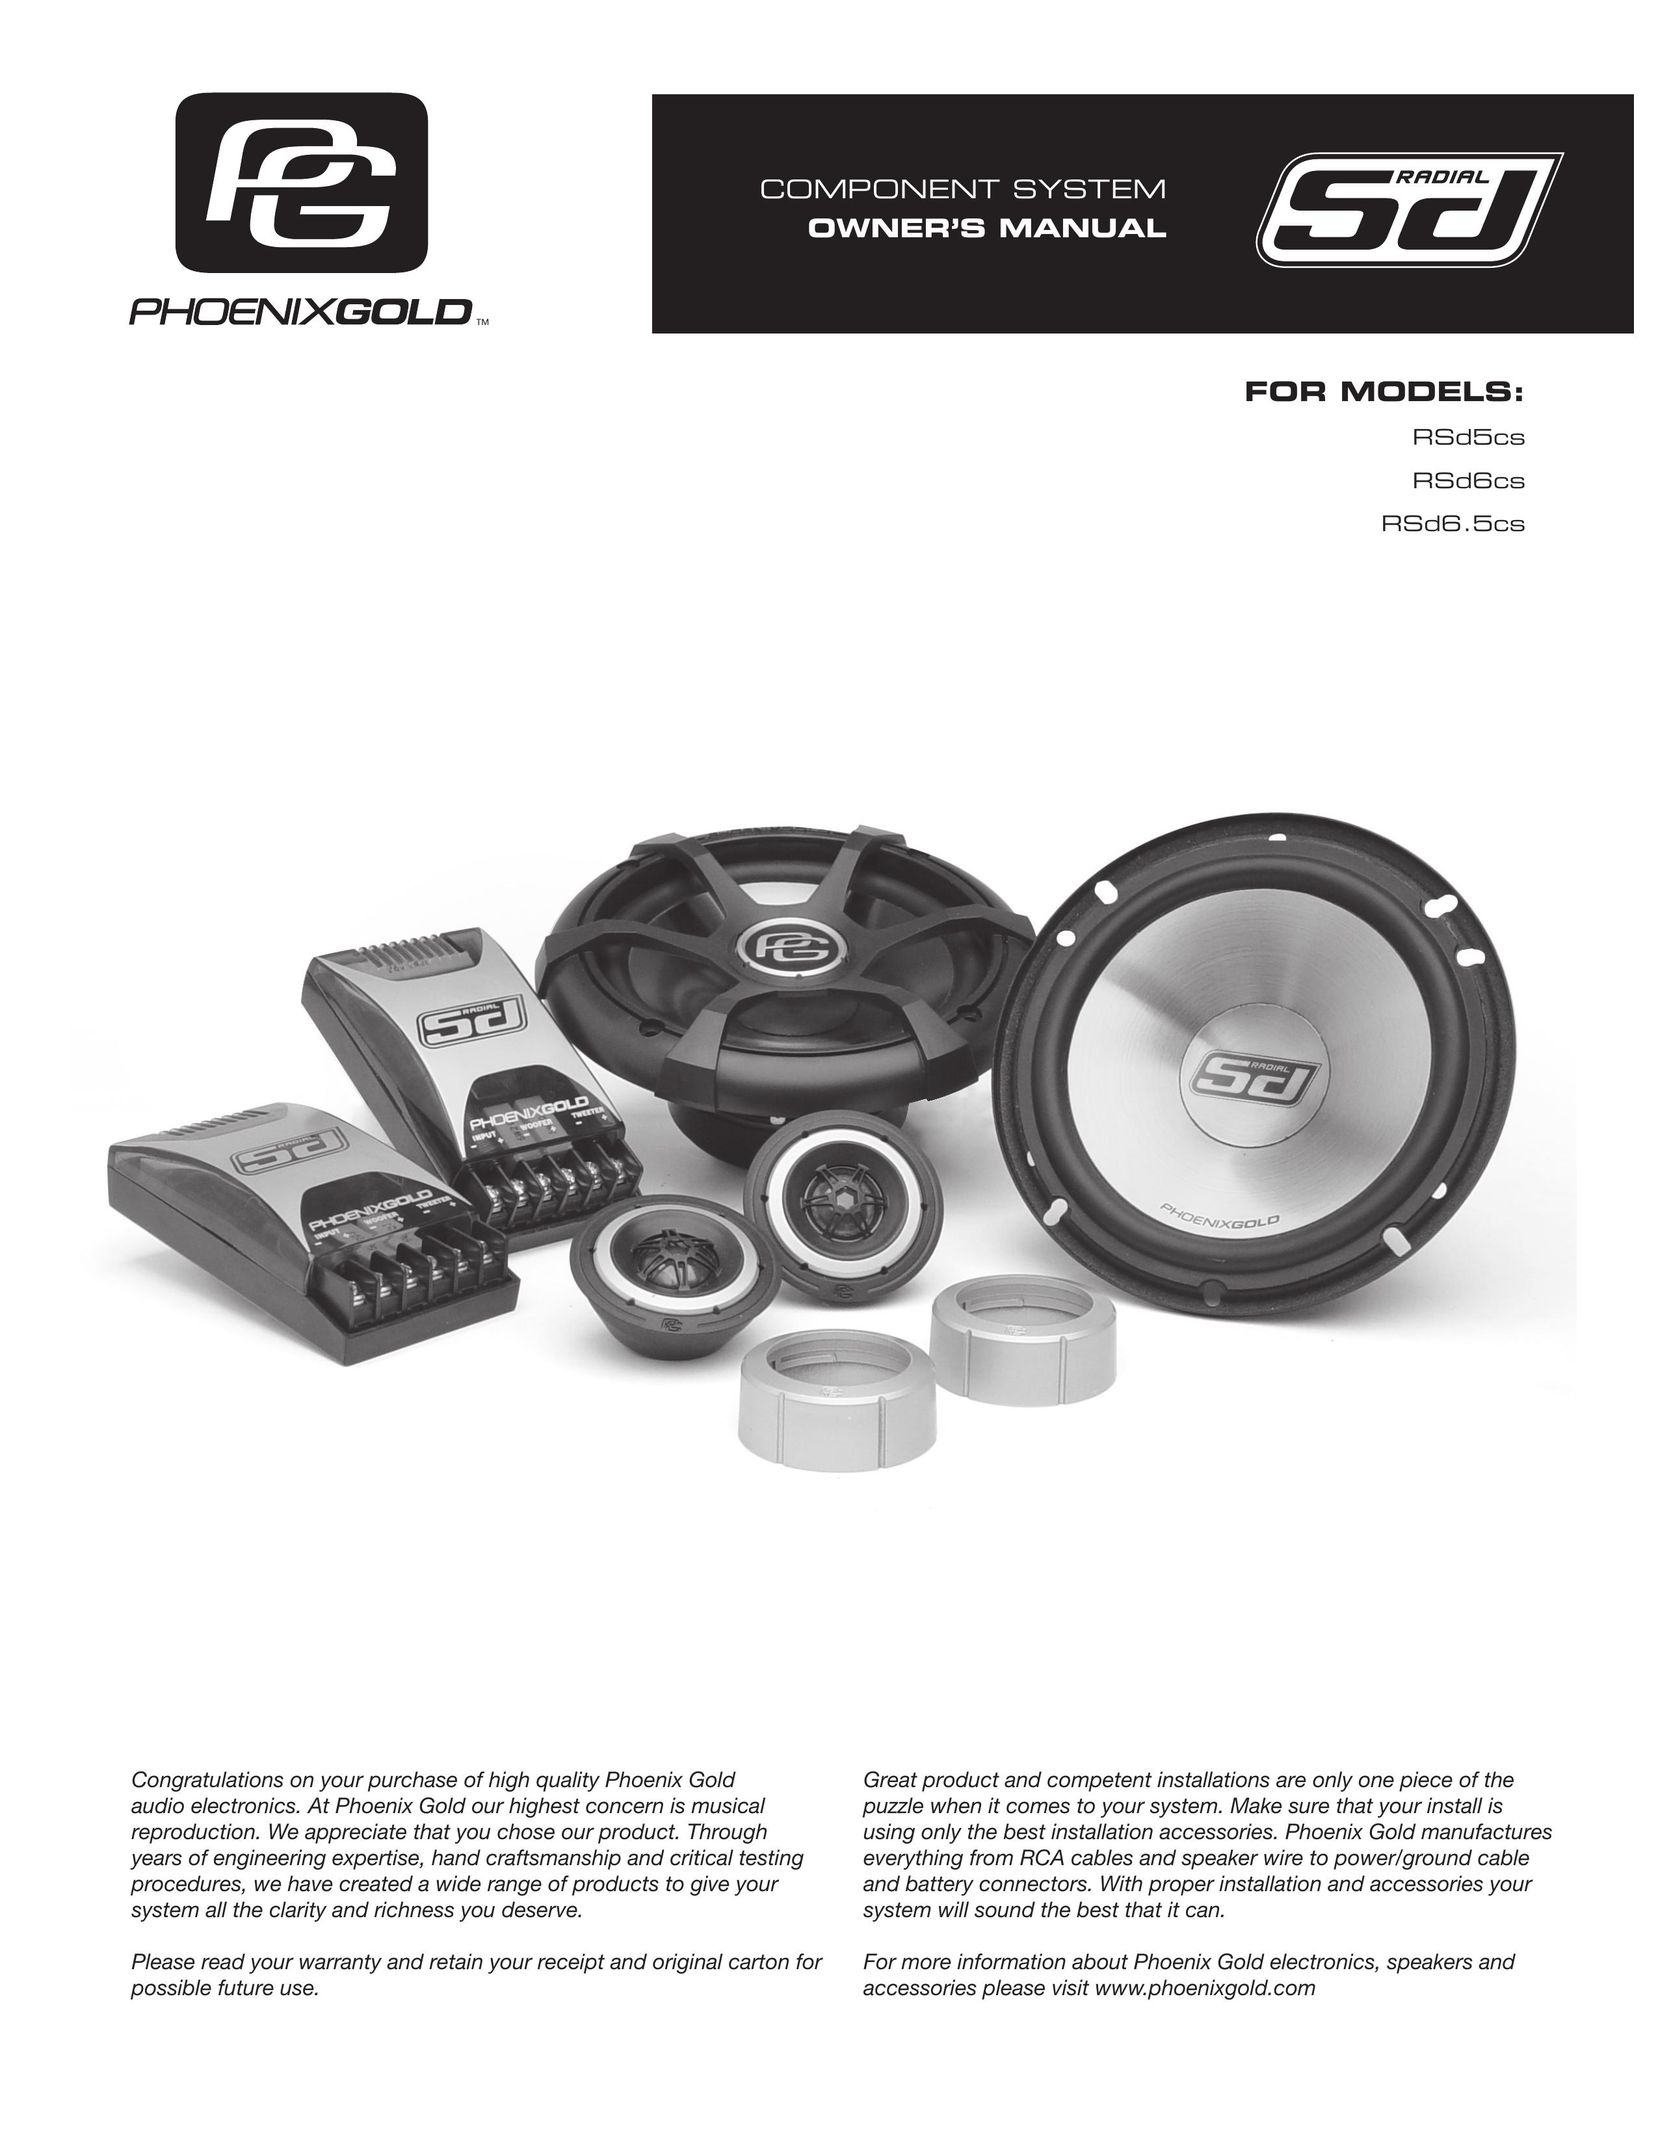 Phoenix Gold RSd6.5cs Car Speaker User Manual